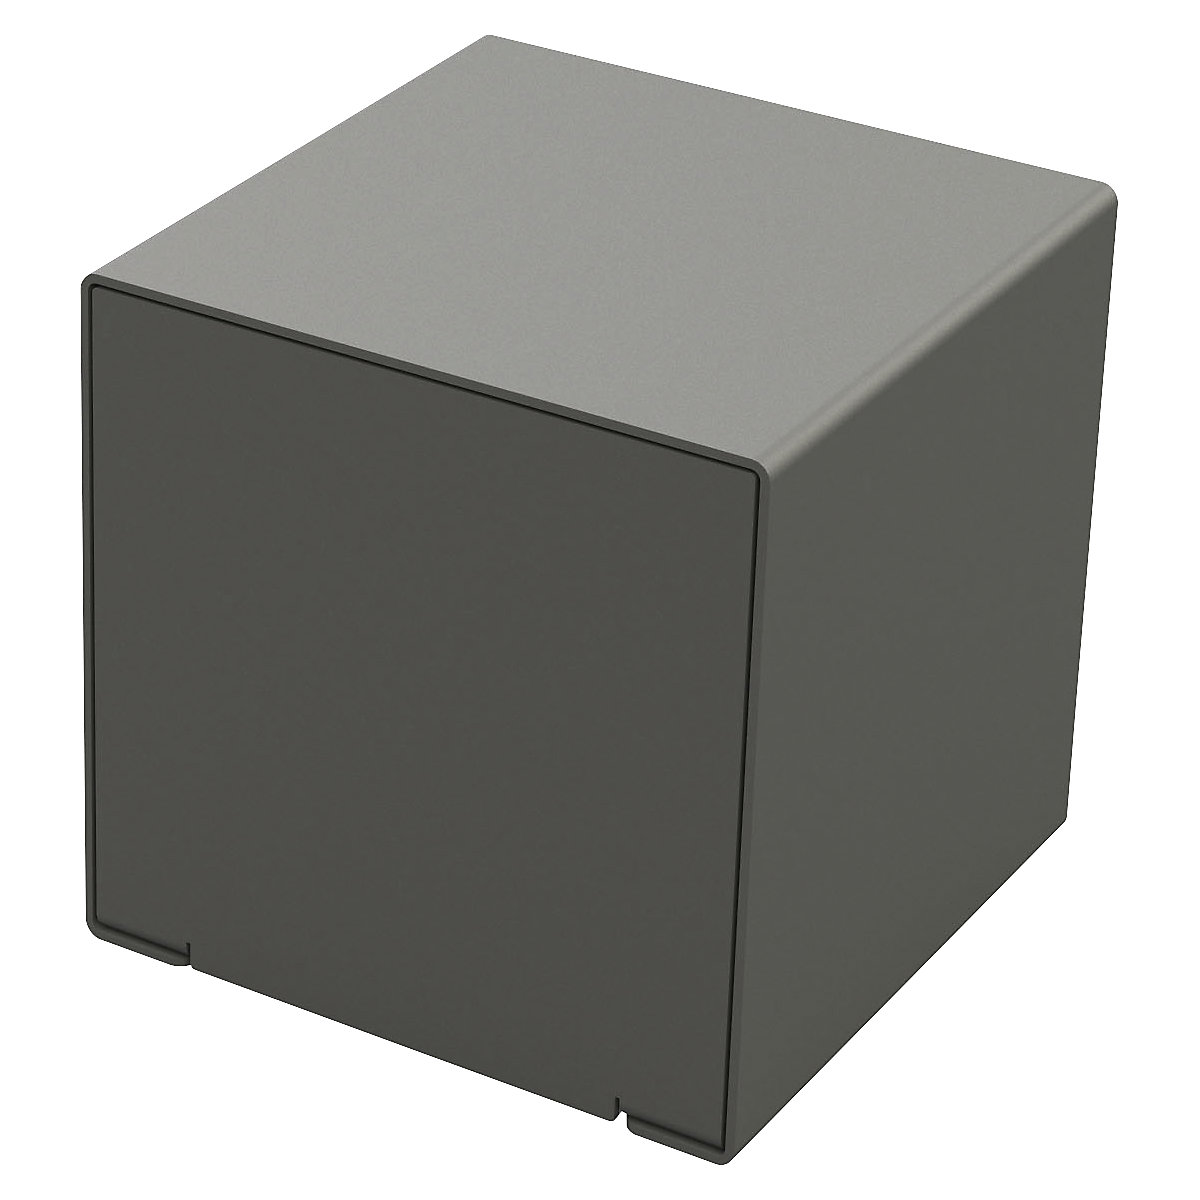 KUBE cube seat made of steel - PROCITY